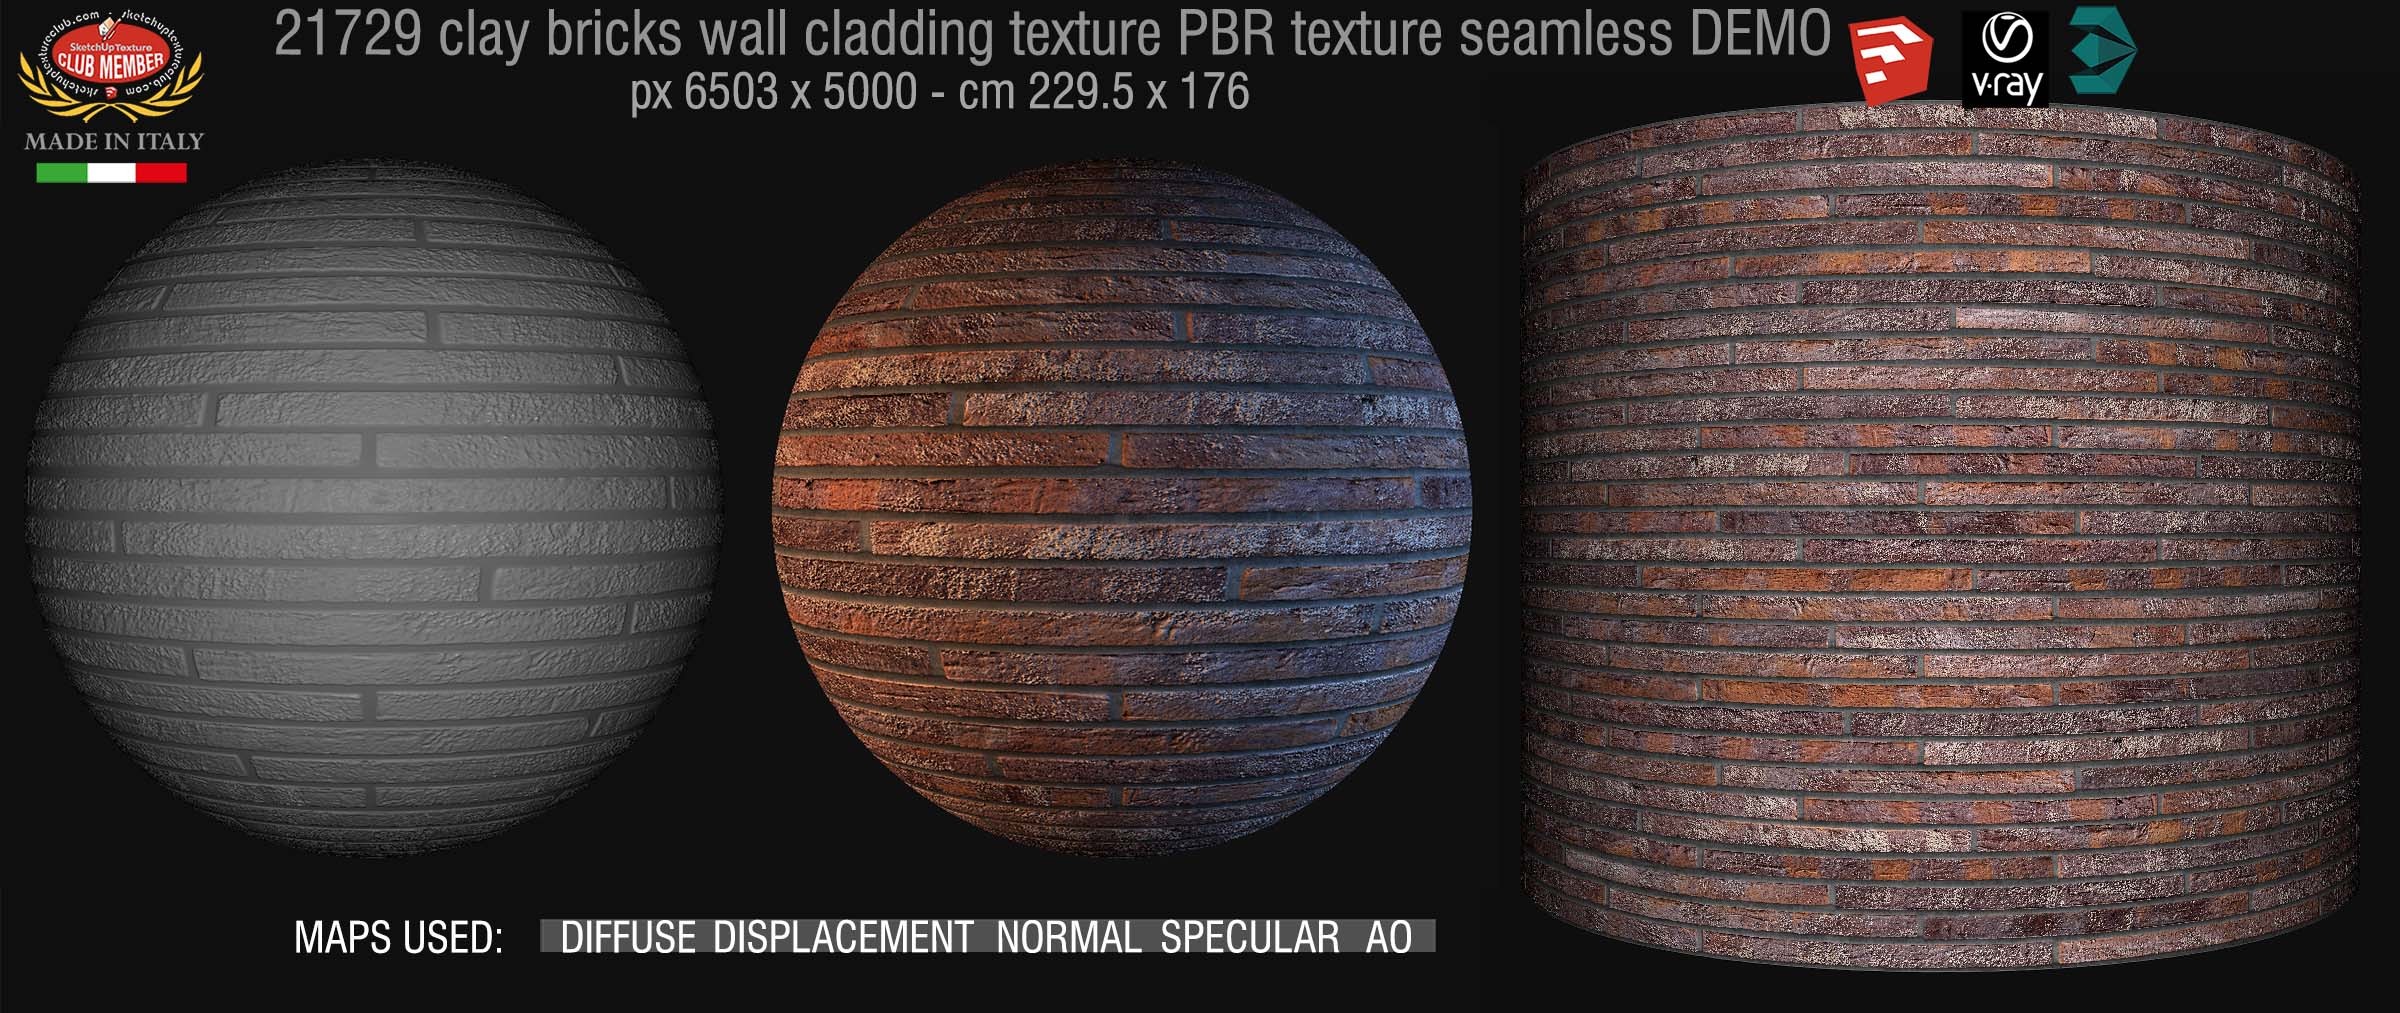 21719 Clay bricks wall cladding PBR texture seamless DEMO